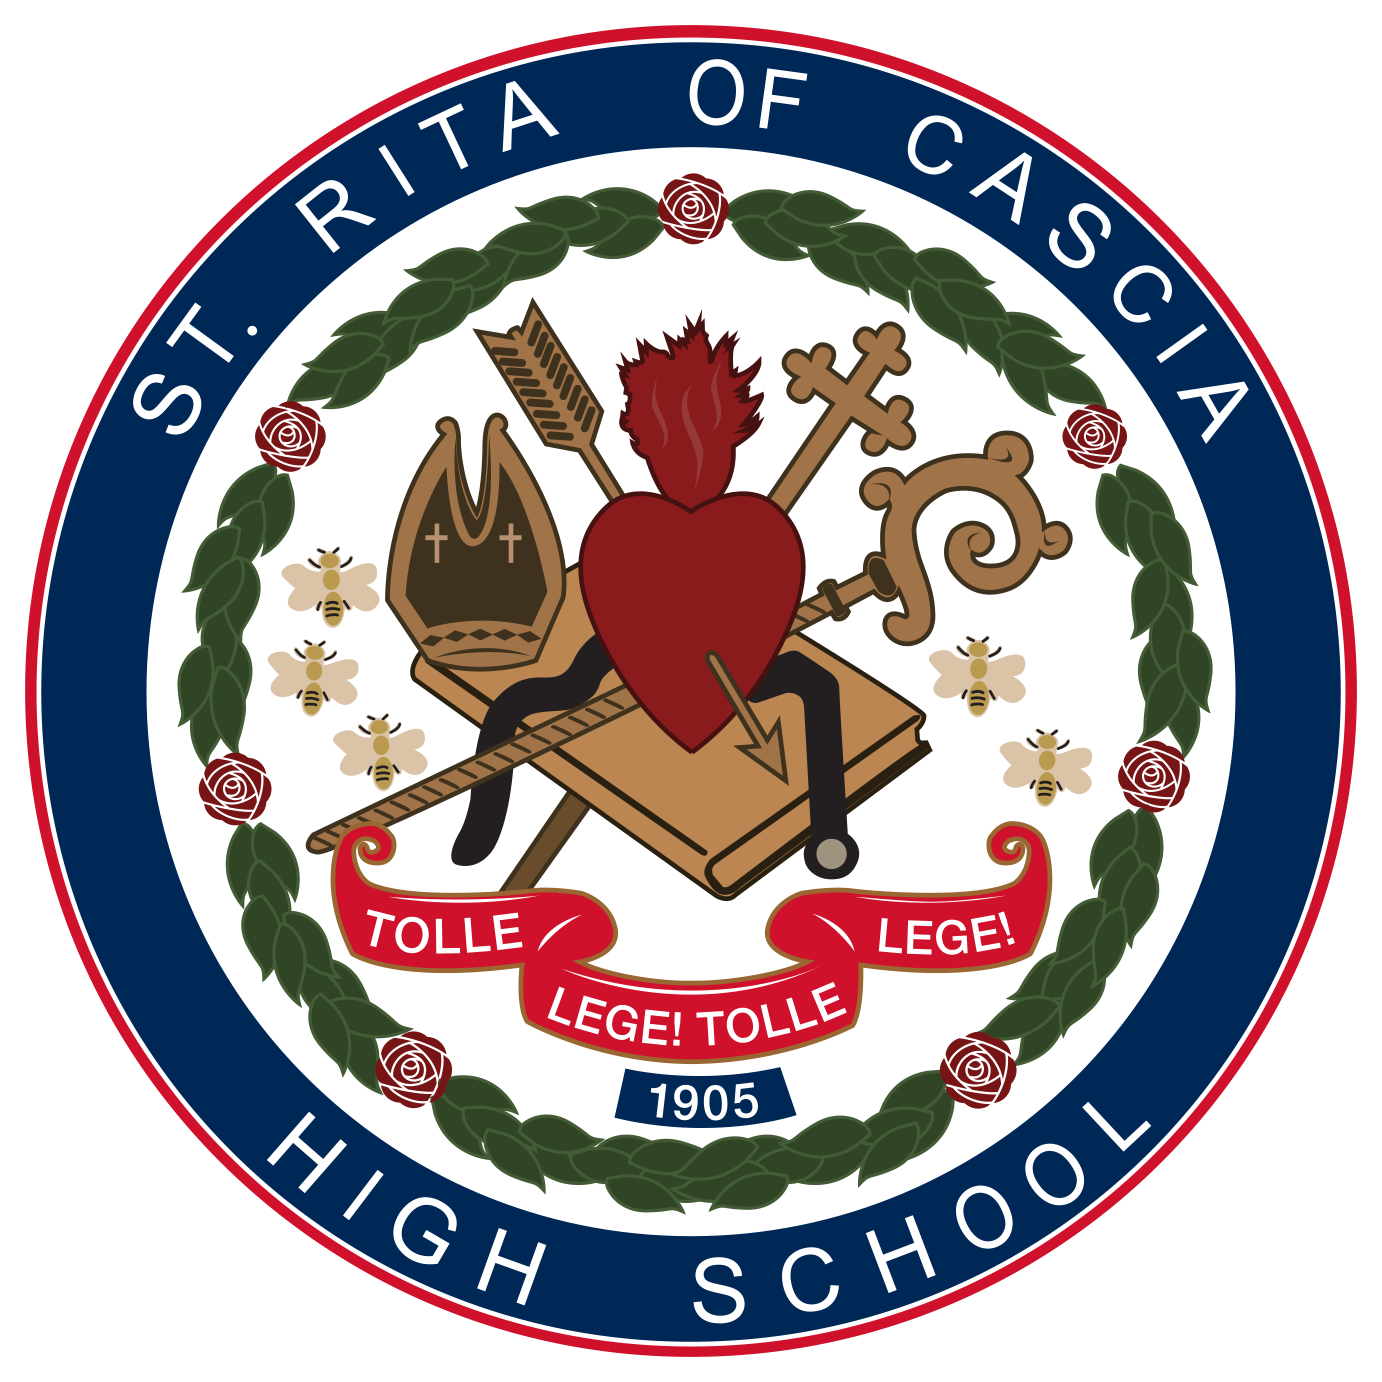 St. TVT体育平台 of Cascia High School